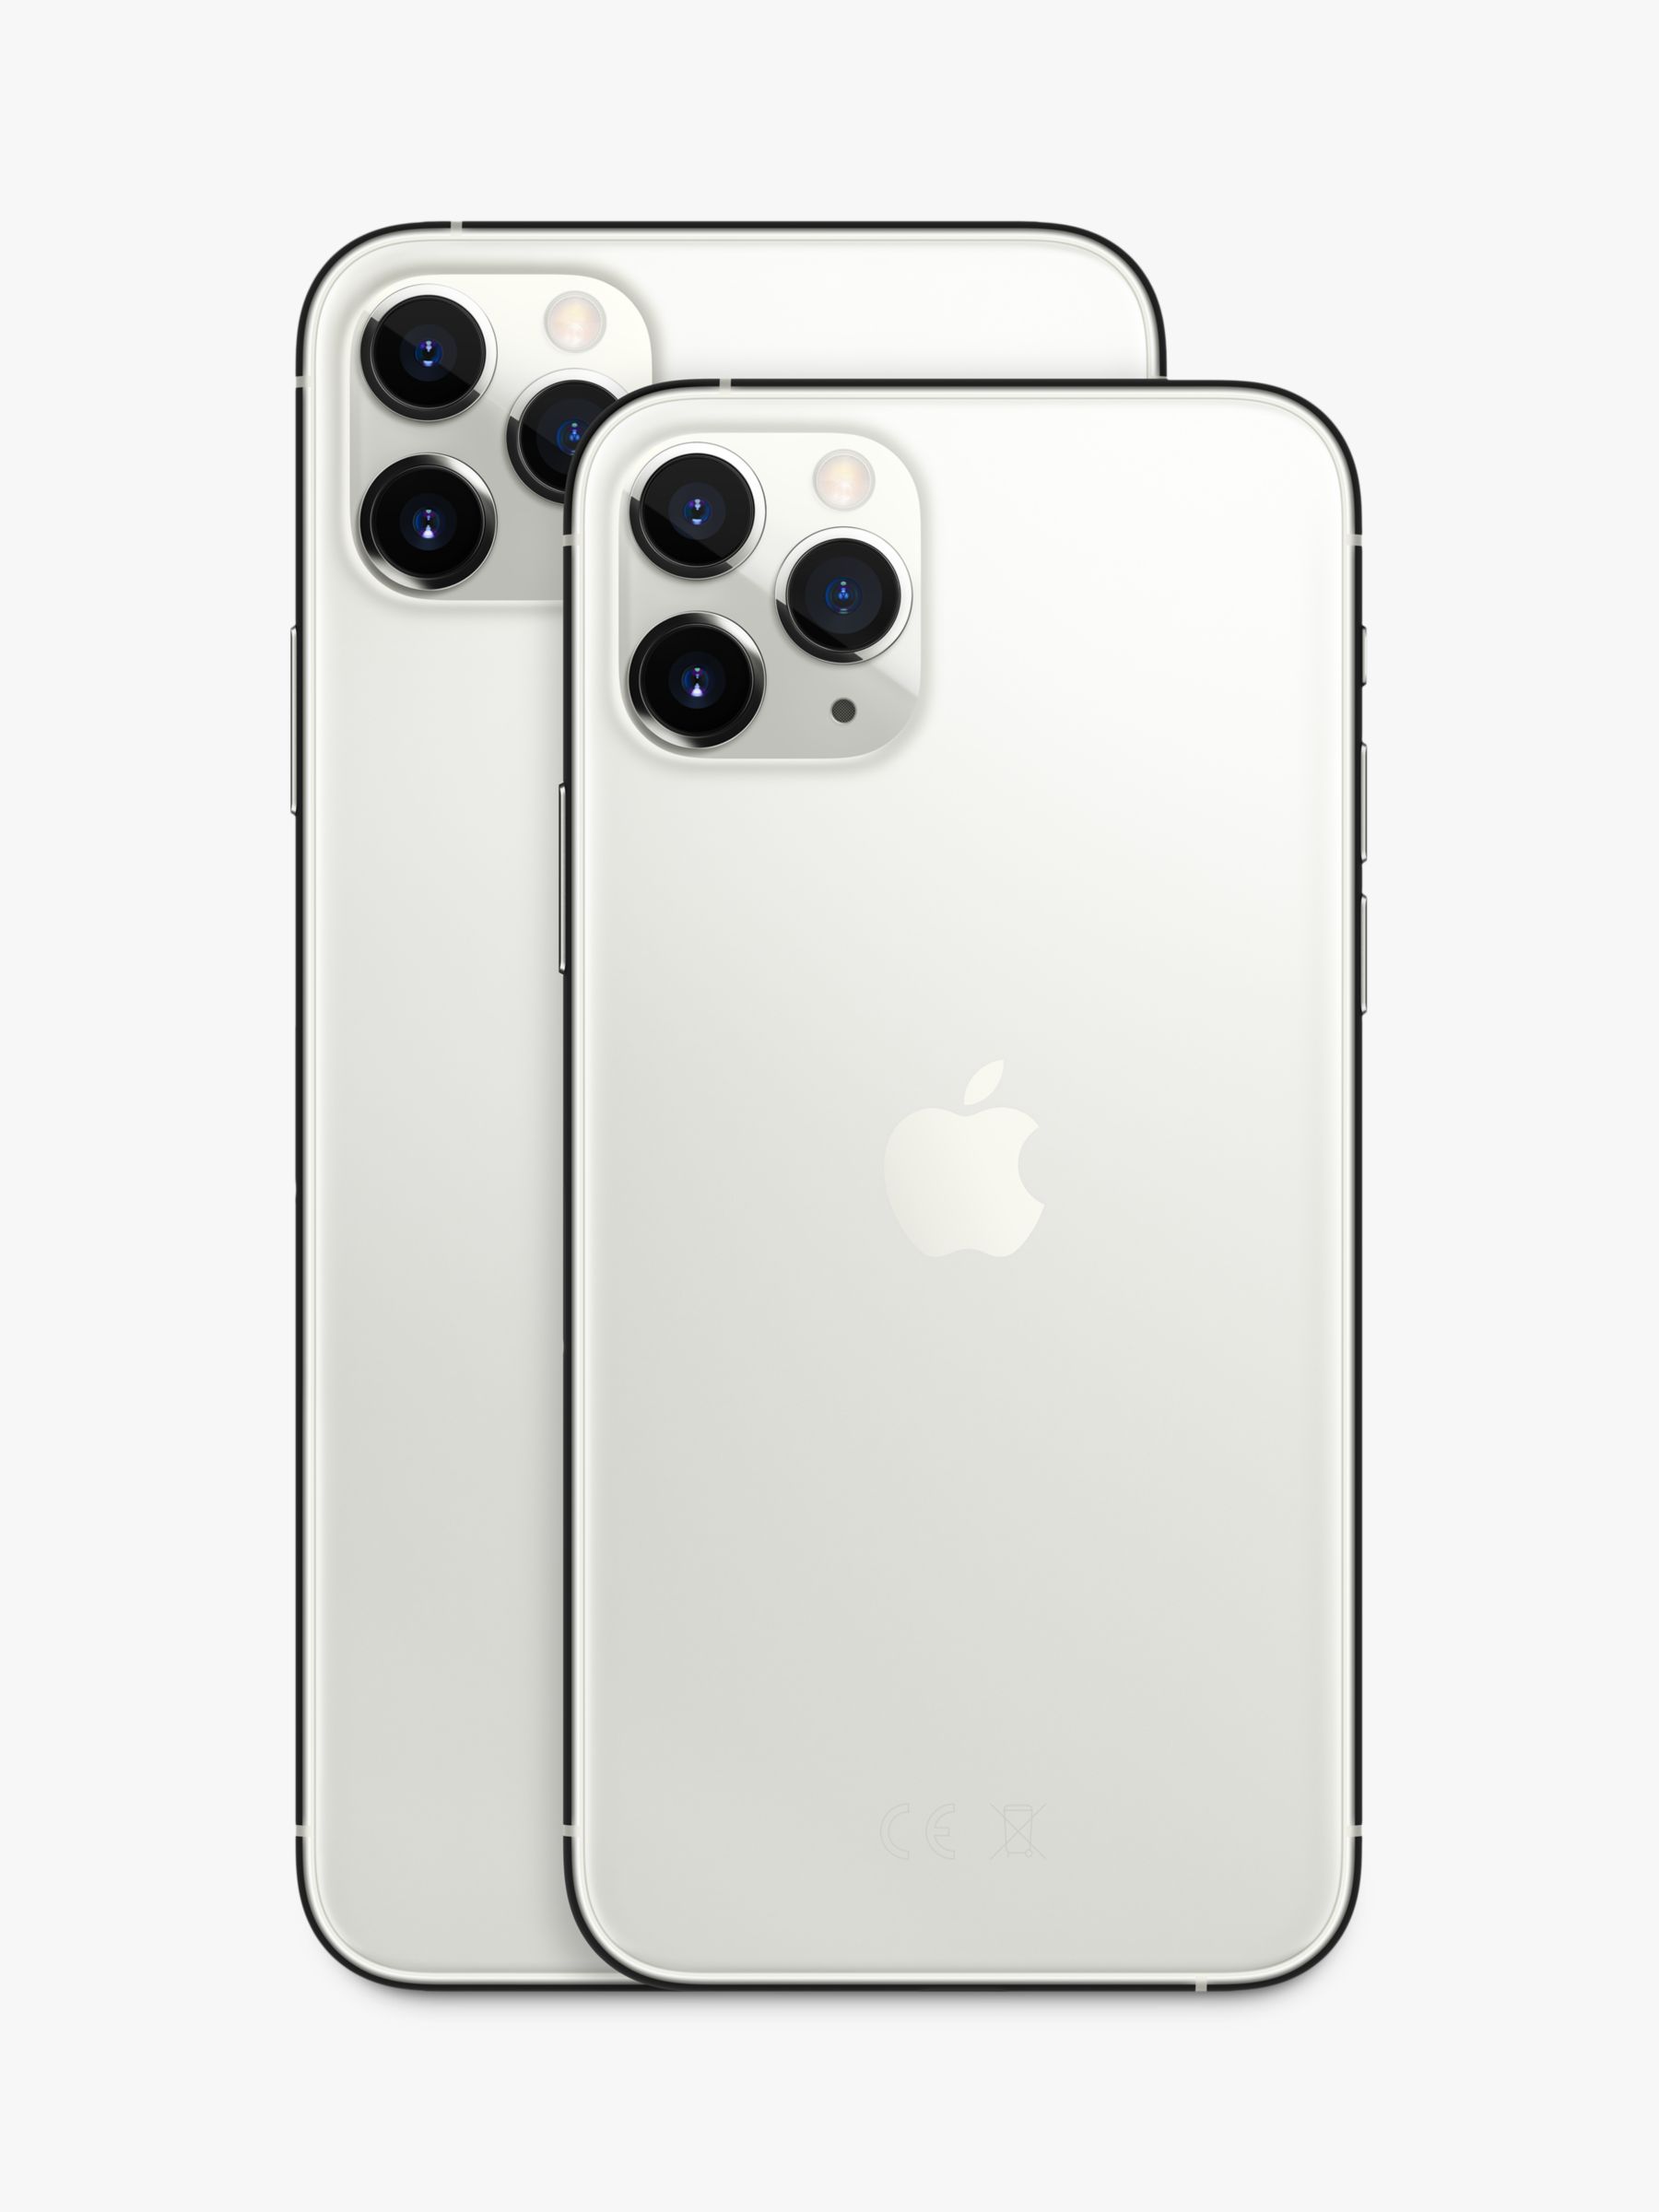 Apple Iphone 11 Pro Max Ios 6 5 4g Lte Sim Free 64gb At John Lewis Partners